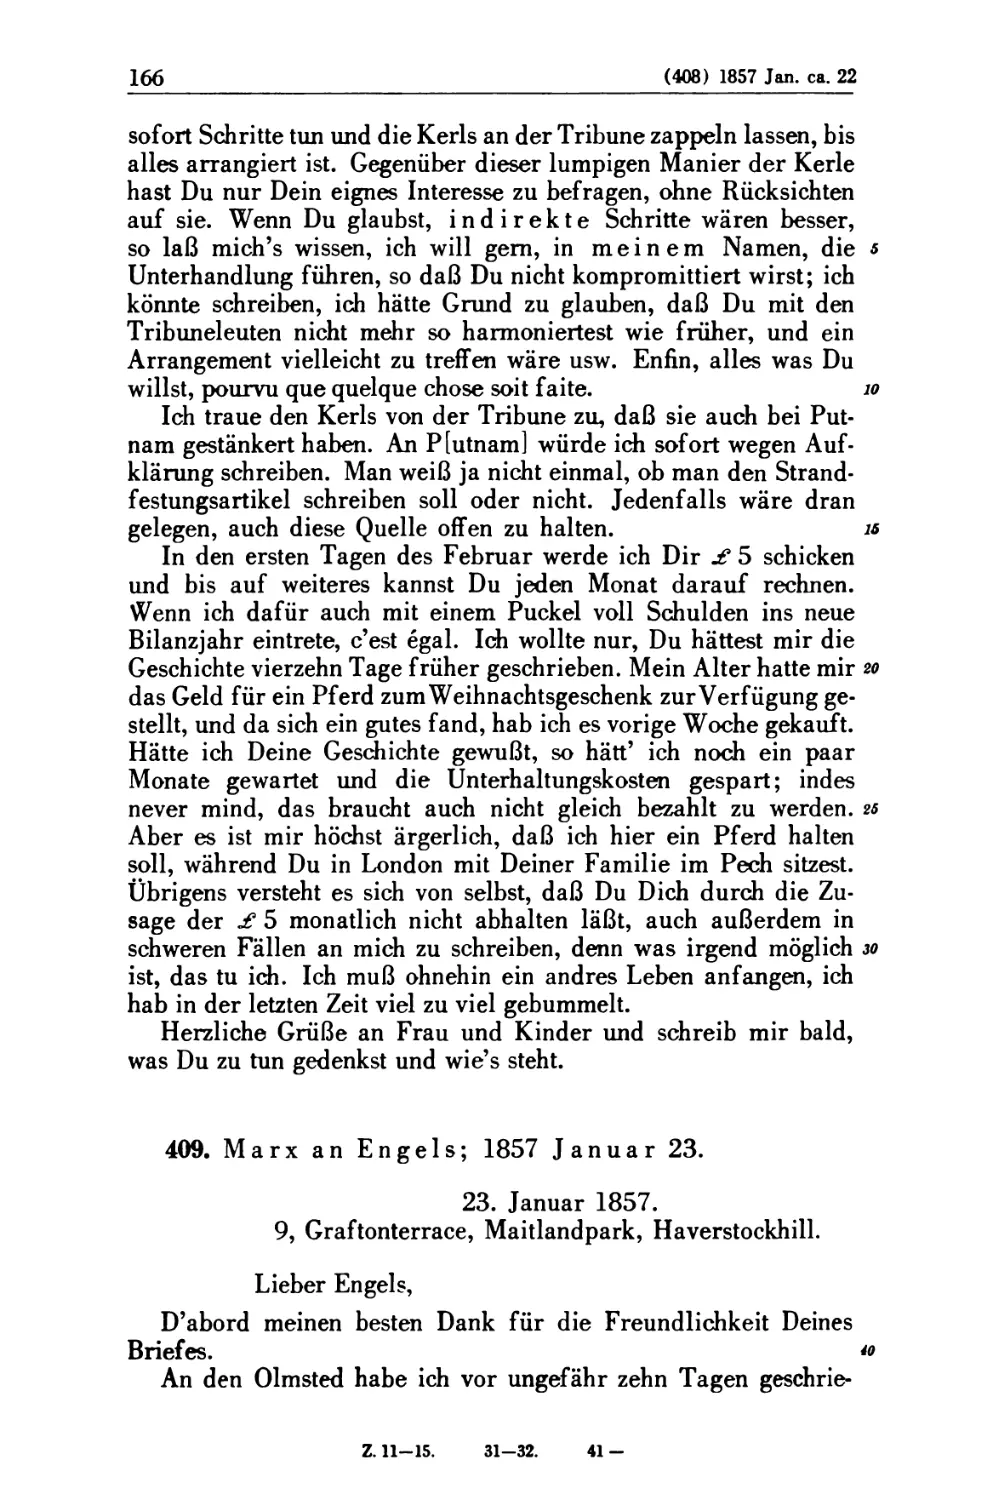 409. Marx an Engels; 1857 Januar 23